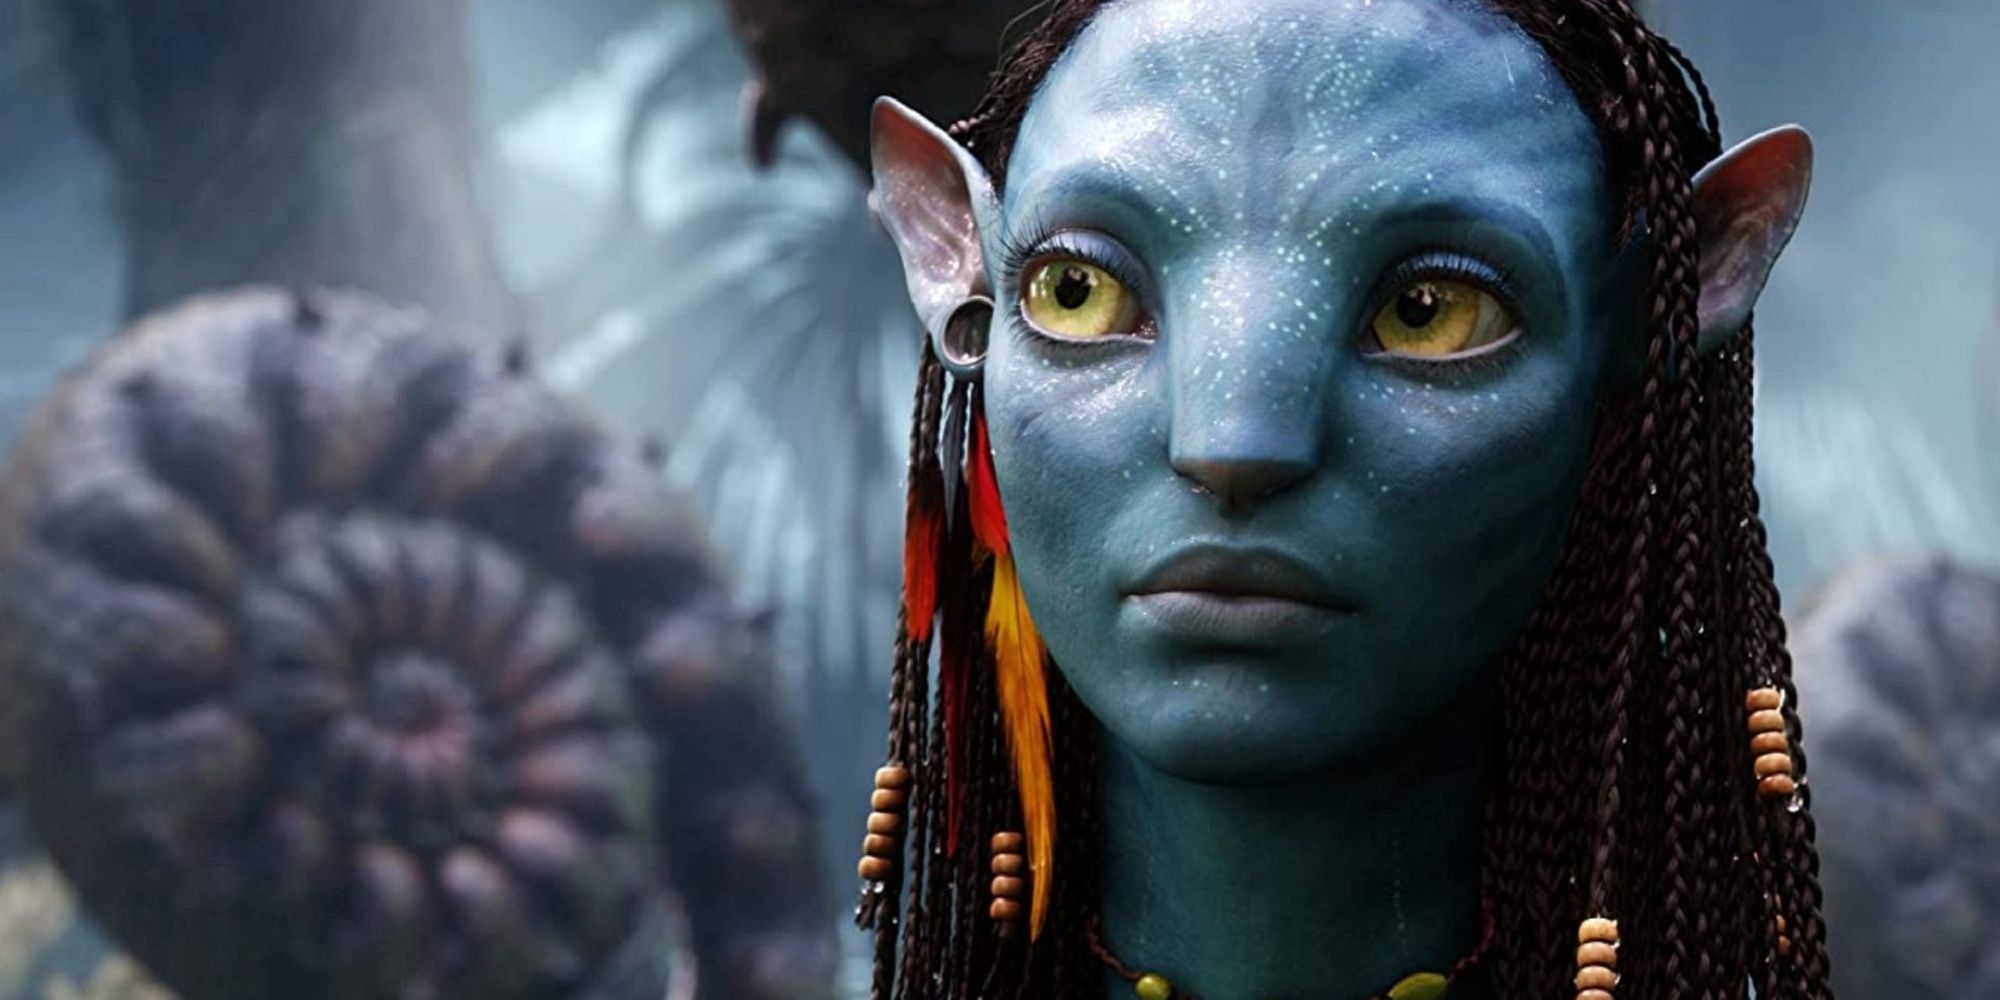 Zoe Saldana as Neytiri on the planet of Pandora in Avatar.